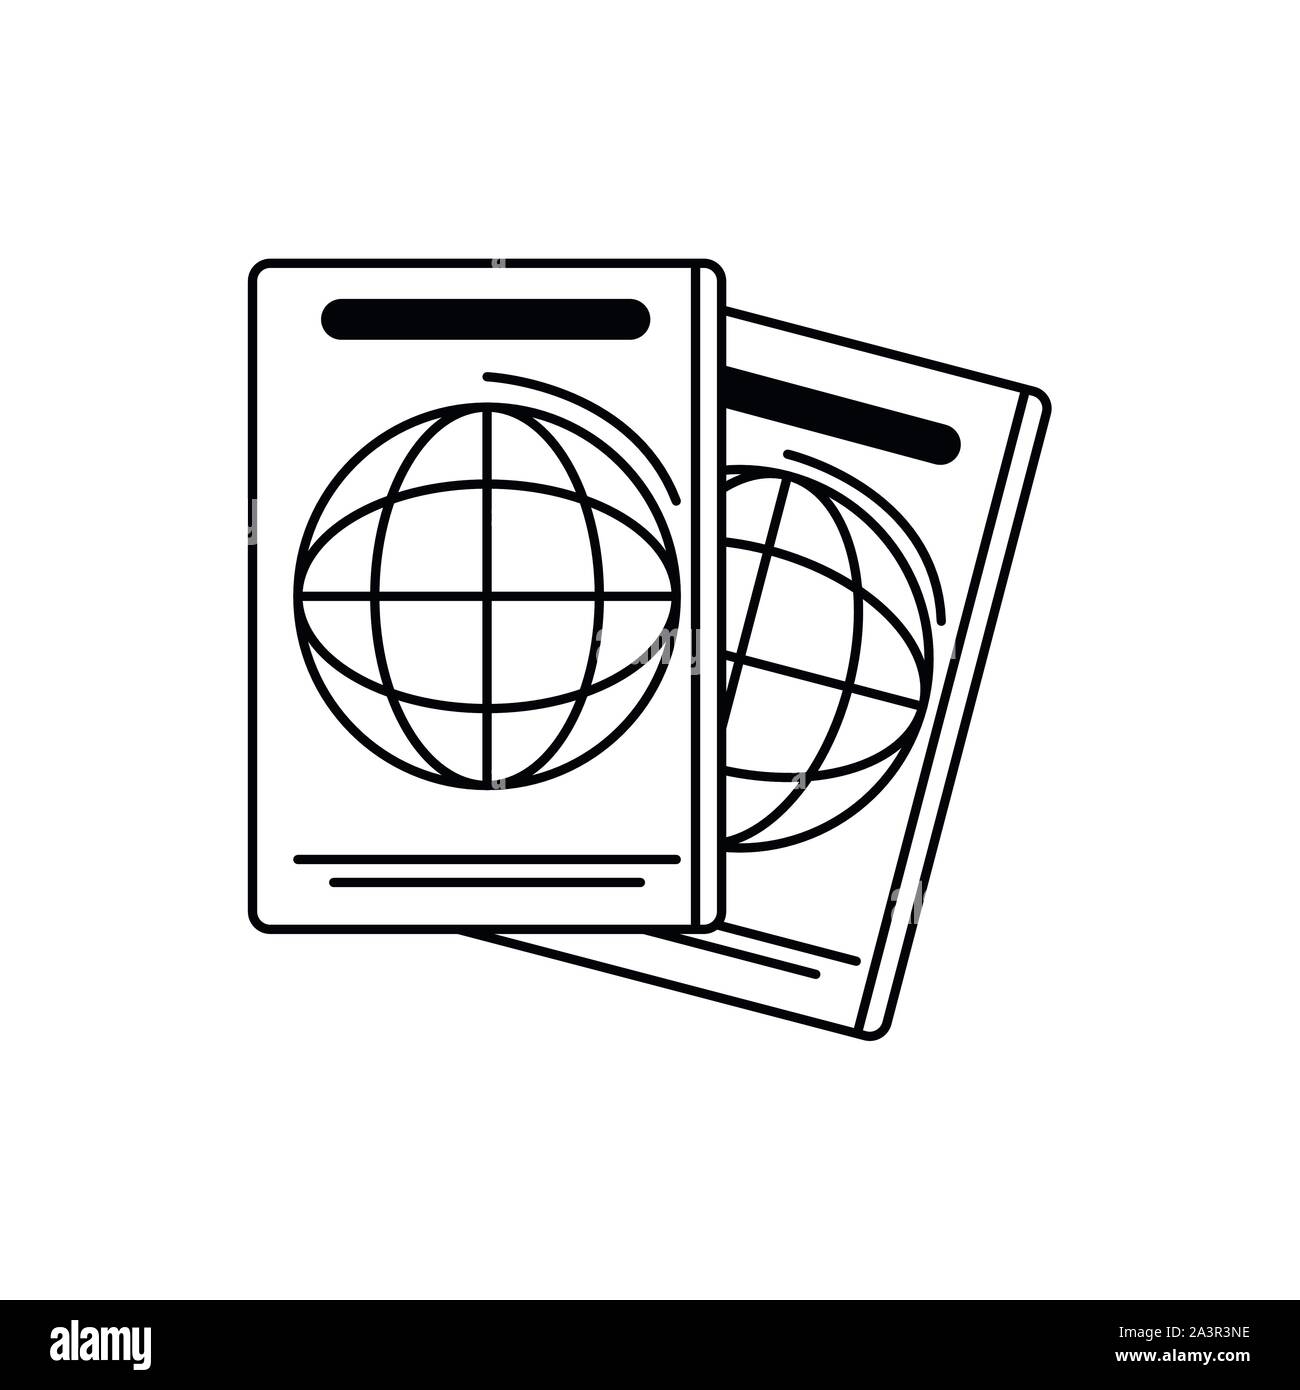 passport identification illustration vacation travel icon line image design Stock Vector